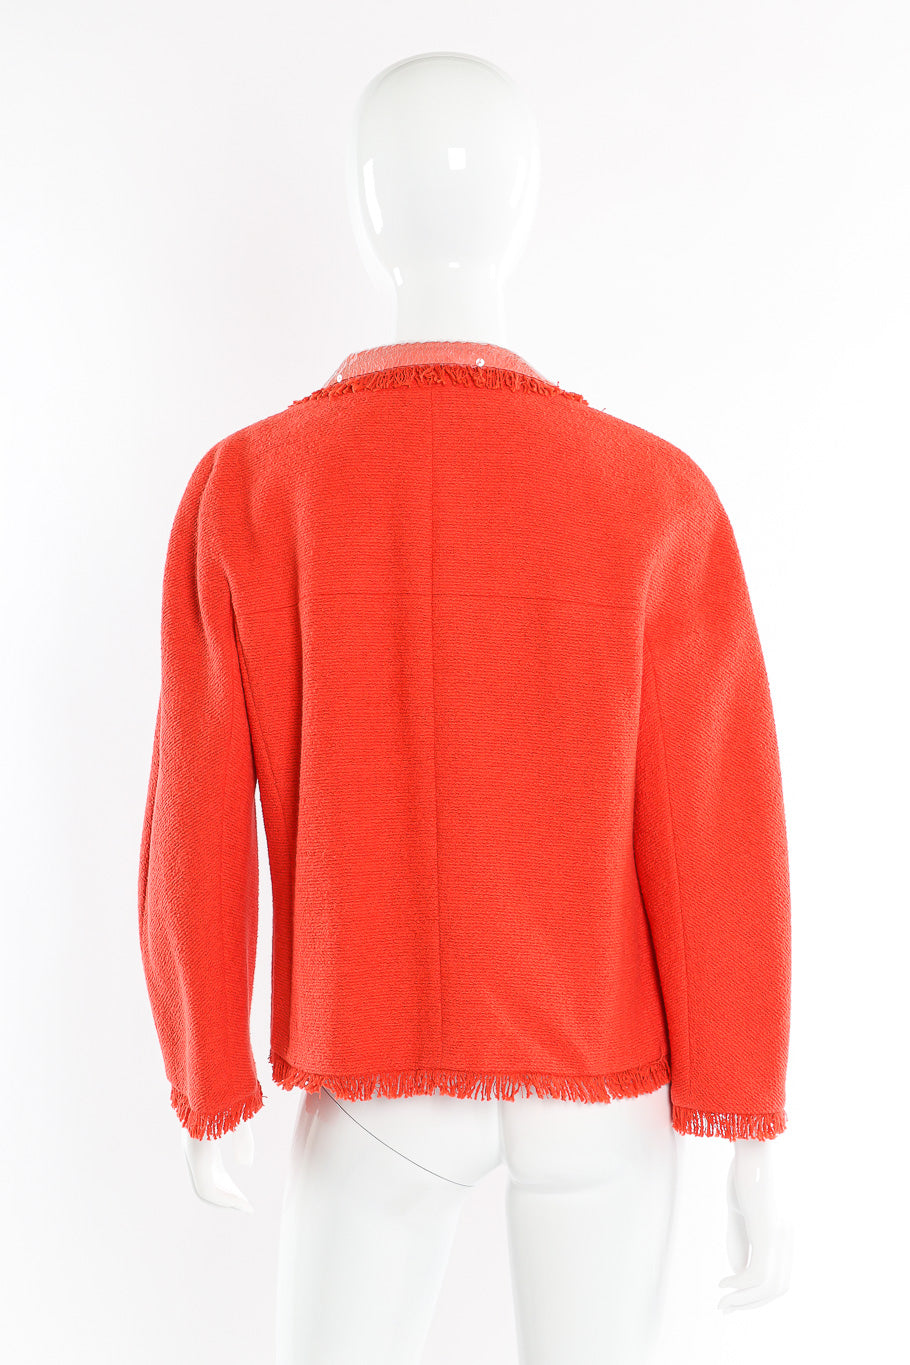 Bouclé tweed knit jacket by Chanel on mannequin back @recessla